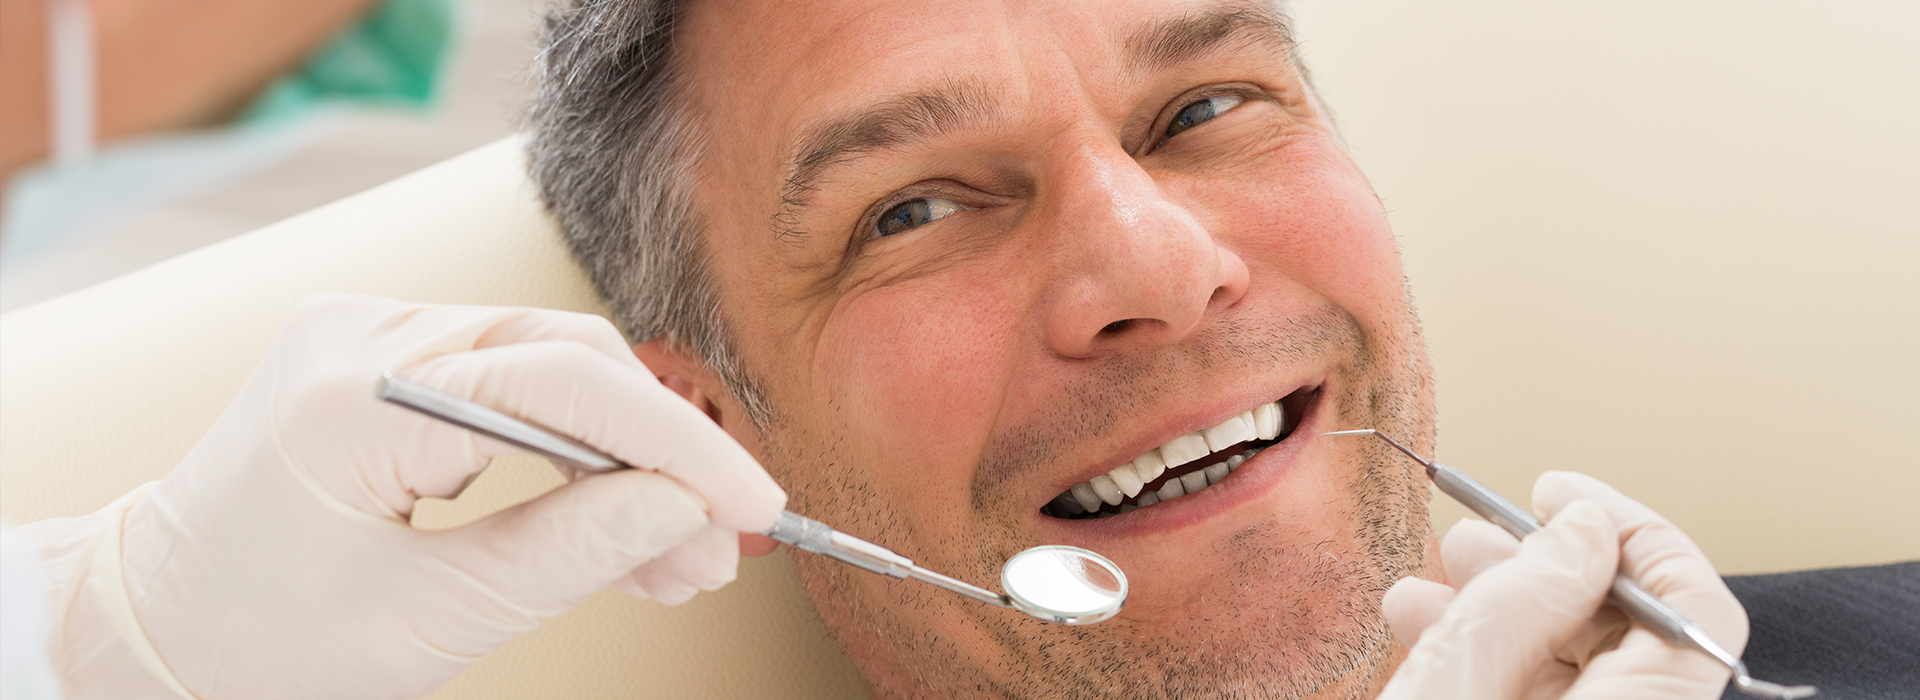 Rosenthal Dental Group | Preventative Program, Sleep Apnea and Opalescence   Teeth Whitening